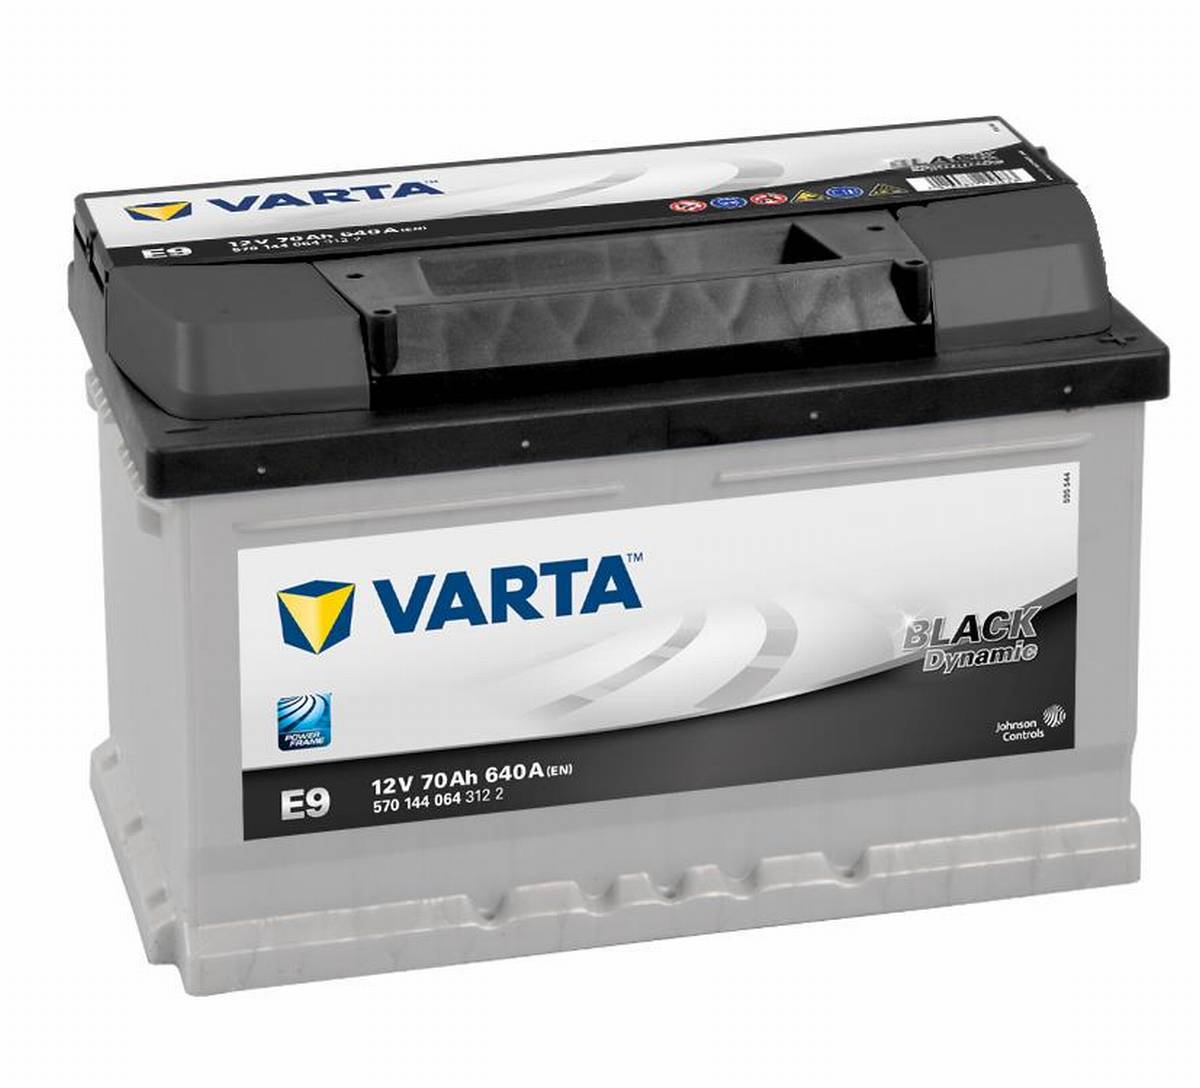 Varta BLACK Dynamic 570 144 064 3122 E9 12V 70Ah 640A/EN car battery, Starter batteries, Boots & Marine, Batteries by application